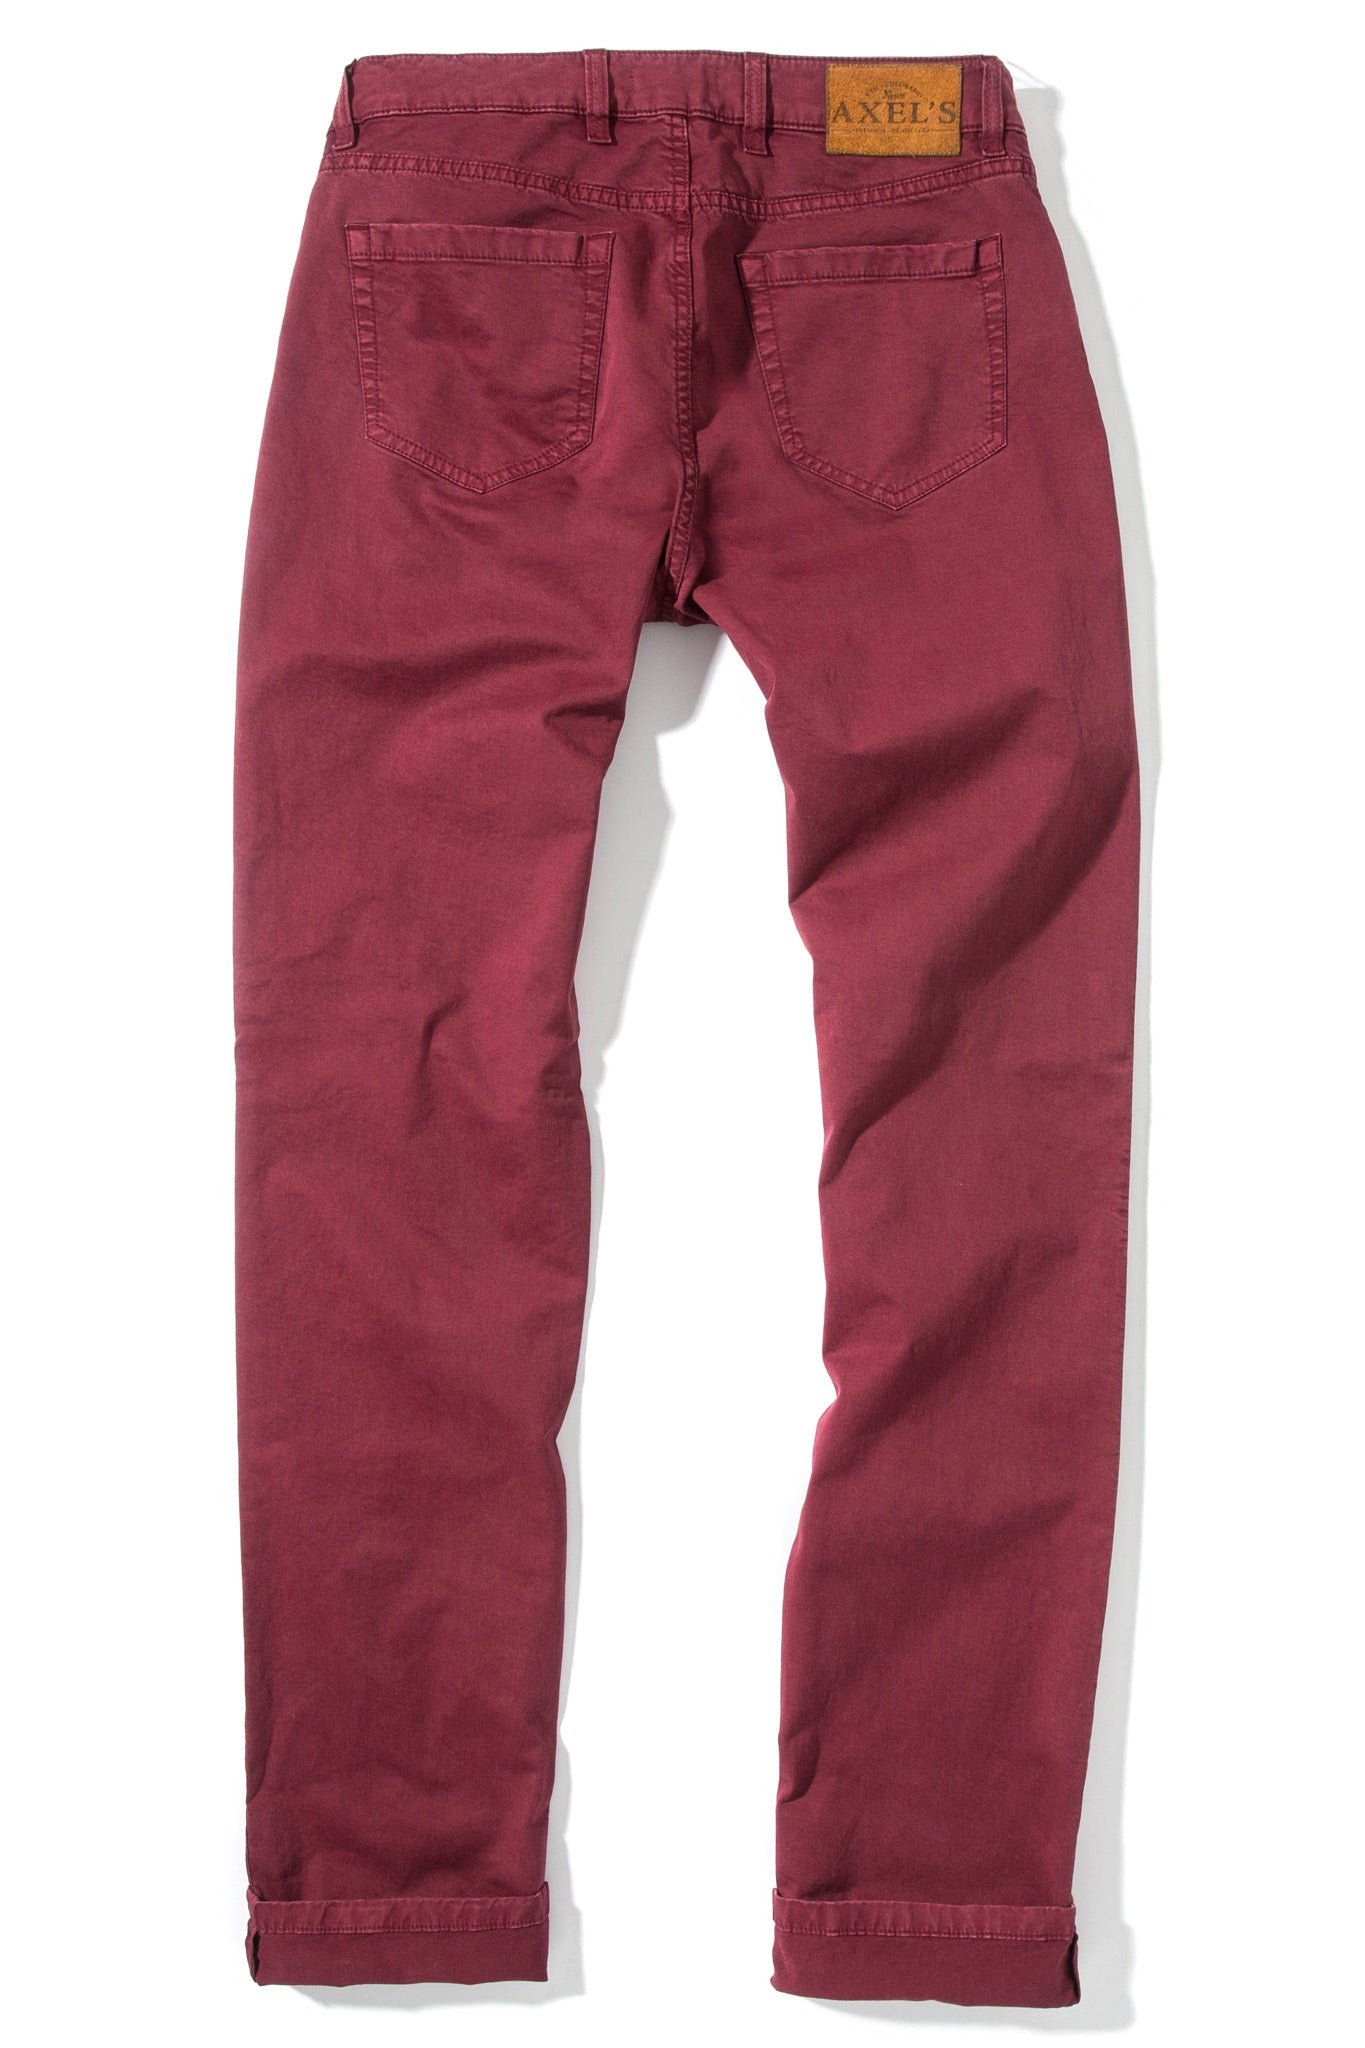 Flagstaff Stretch Cotton Twill in Bordeaux | Mens - Pants - 5 Pocket | Axels Premium Denim